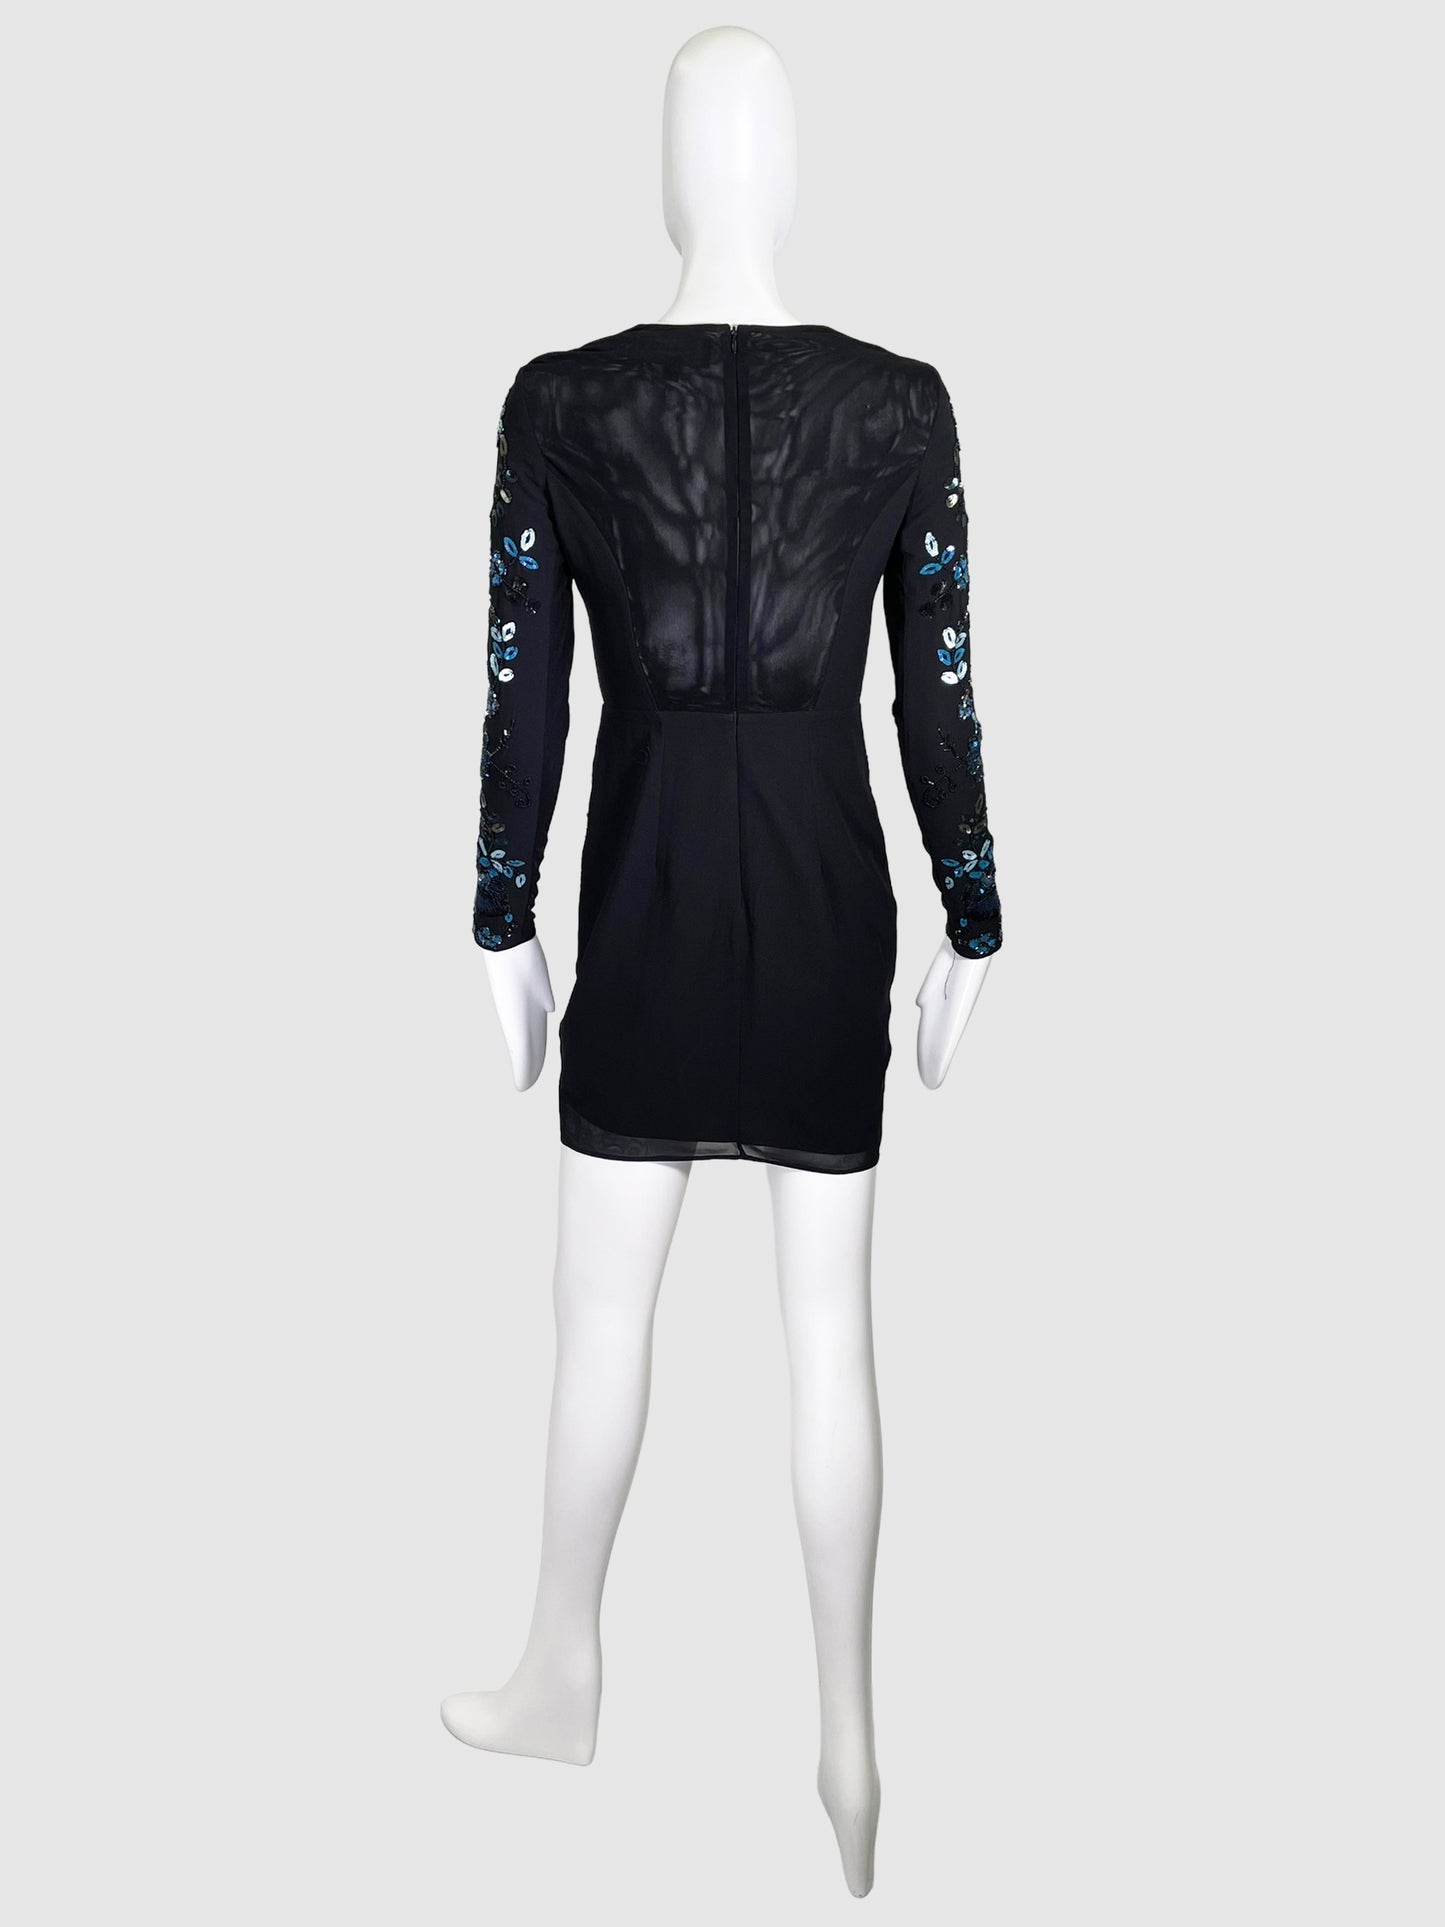 Needle & Thread Black w/ Blue Beaded Long sleeves Dress - Size 8